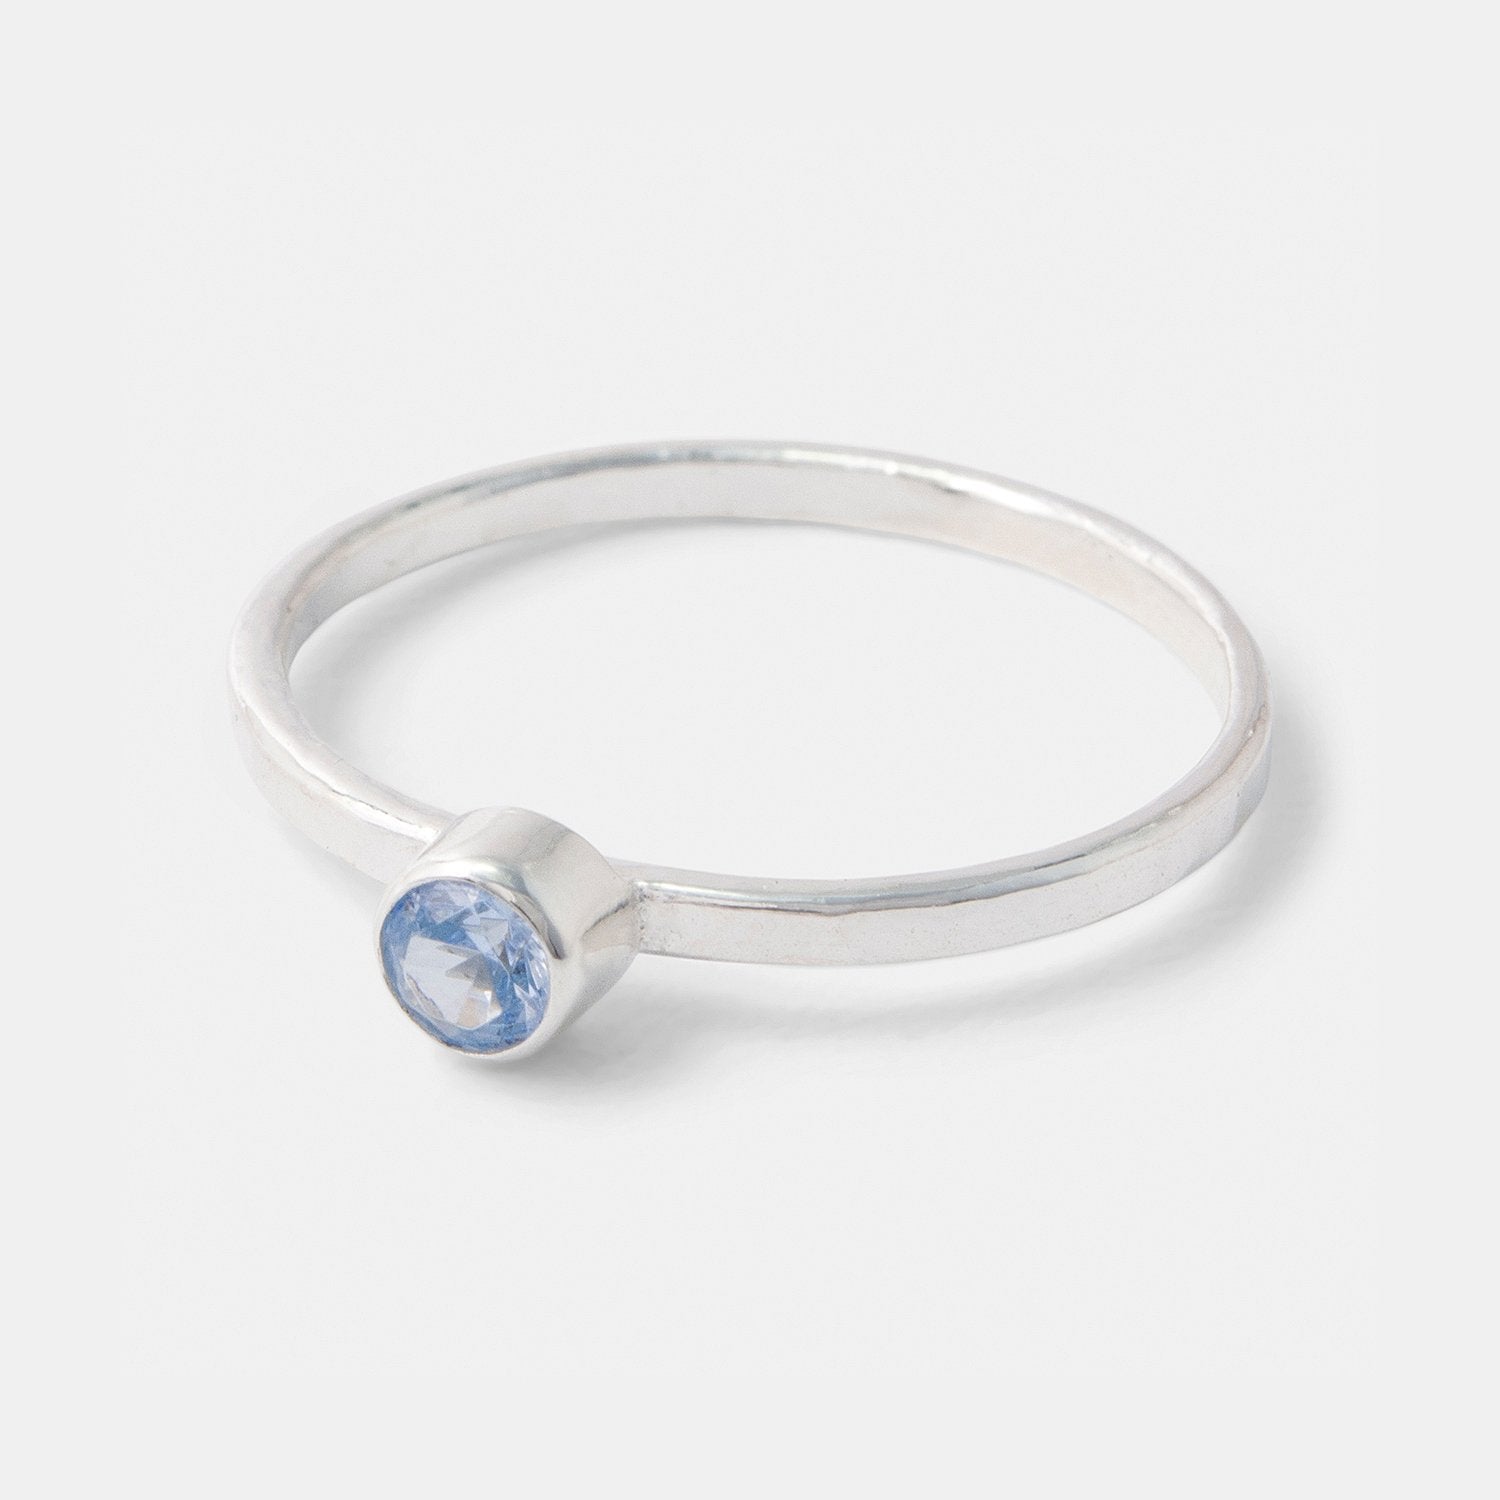 Aquamarine stacking ring - Simone Walsh Jewellery Australia